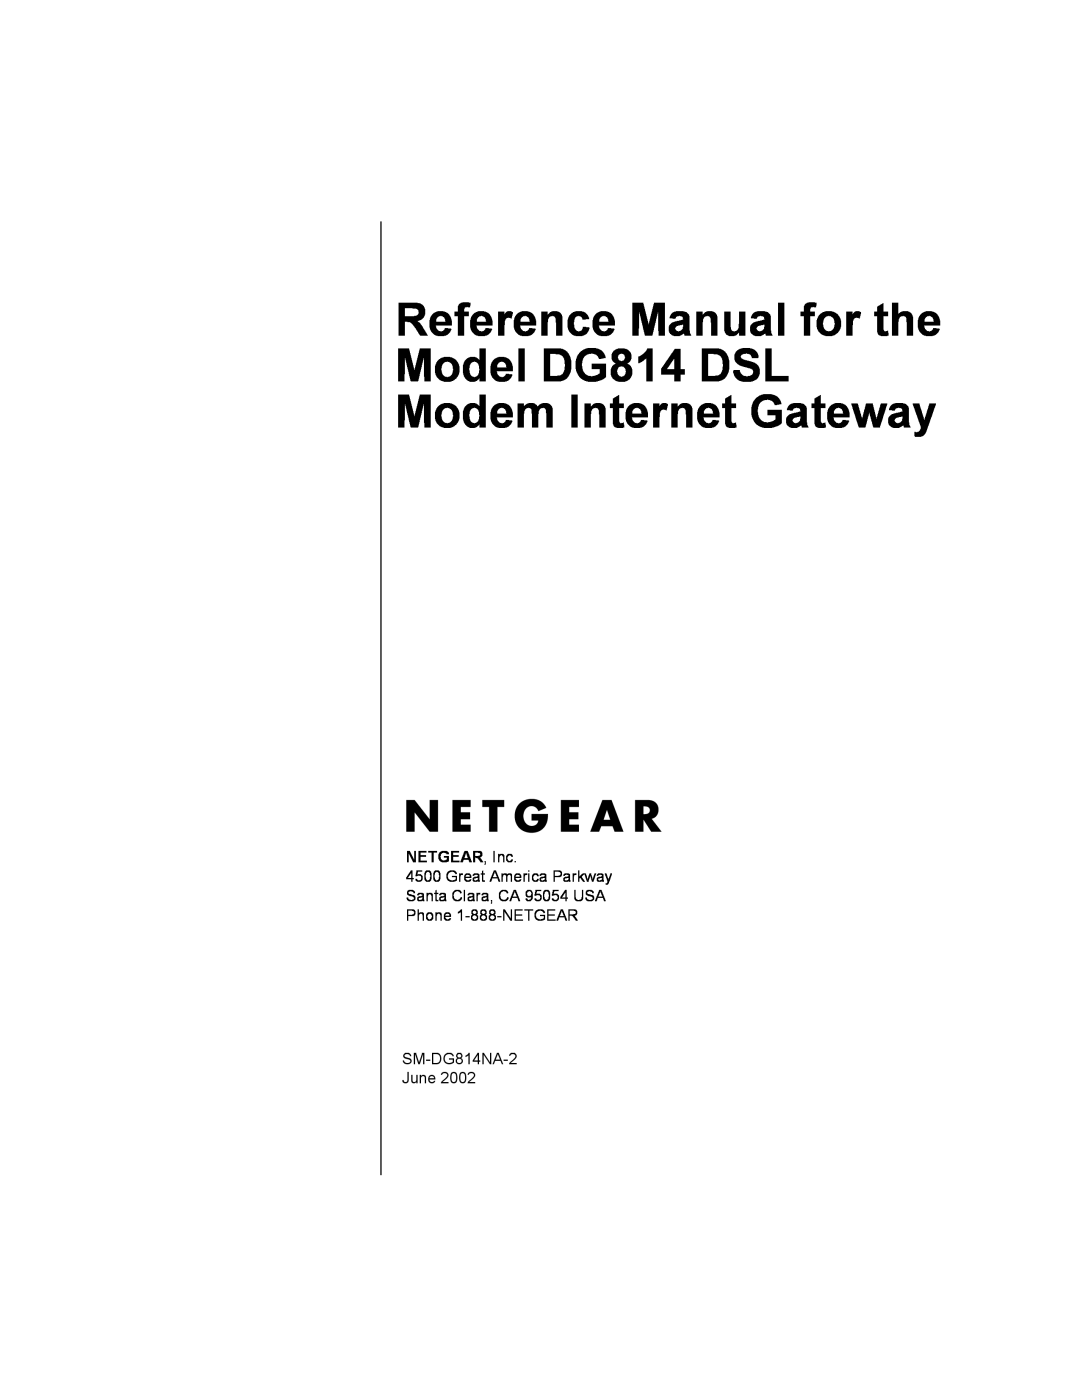 NETGEAR manual Reference Manual for the Model DG814 DSL Modem Internet Gateway, NETGEAR, Inc 